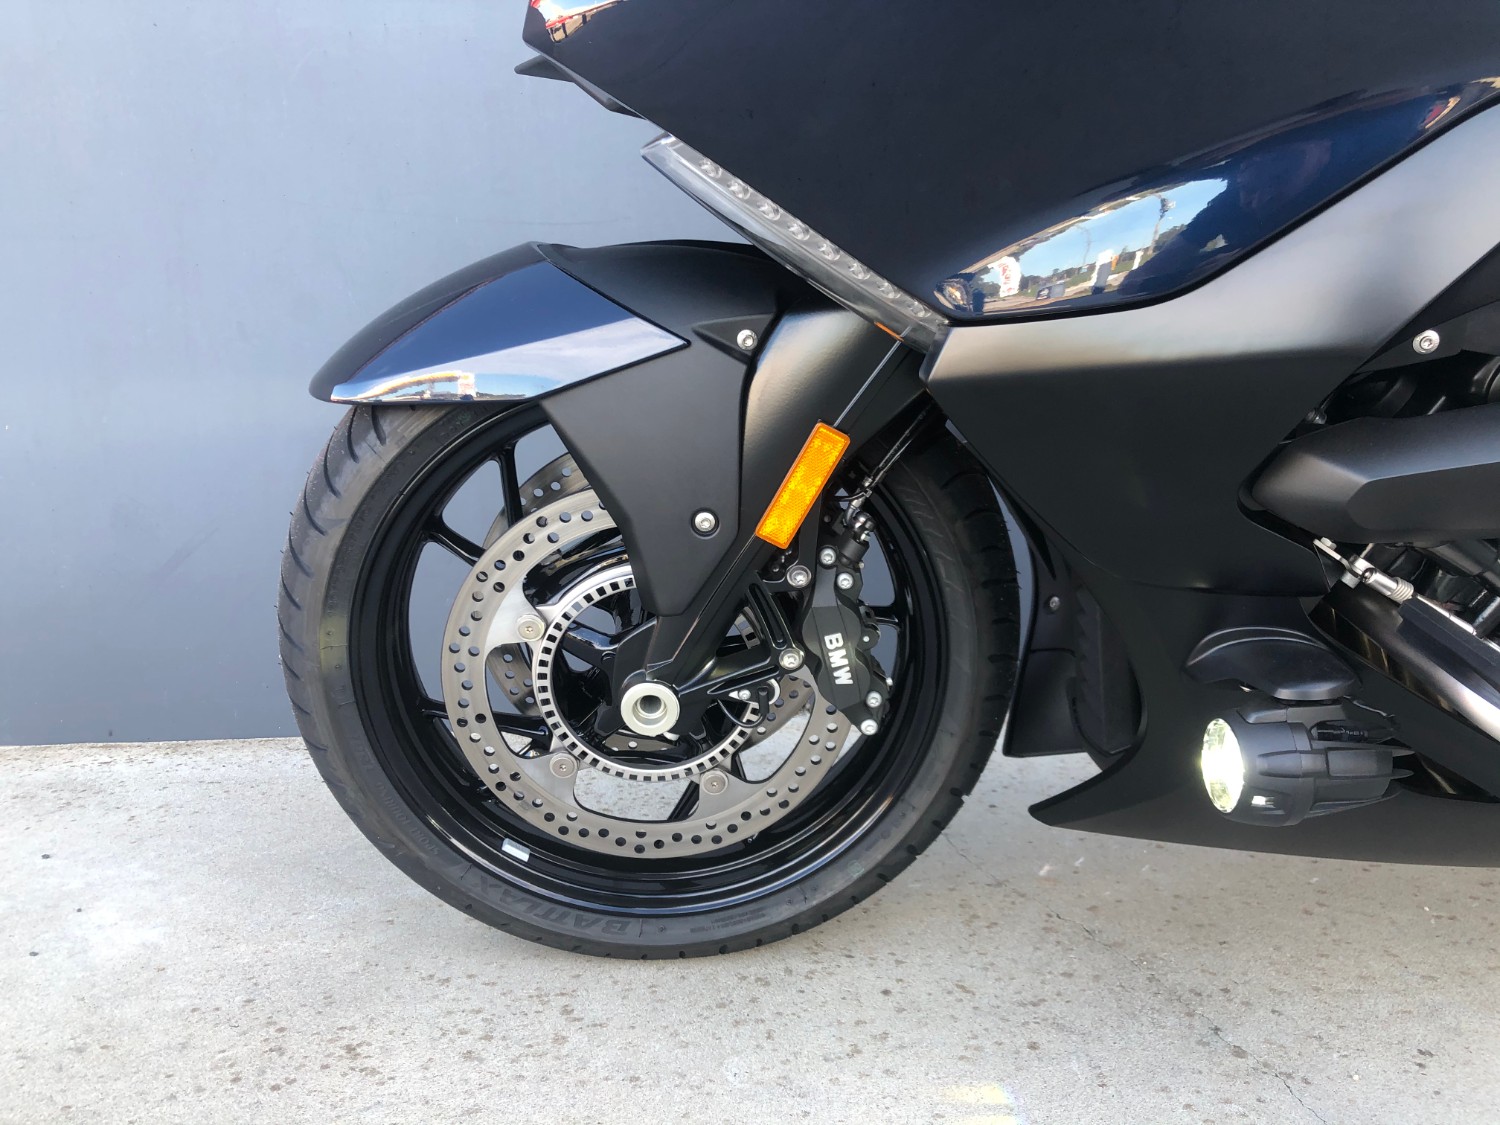 2019 BMW K1600 B Deluxe Motorcycle Image 12